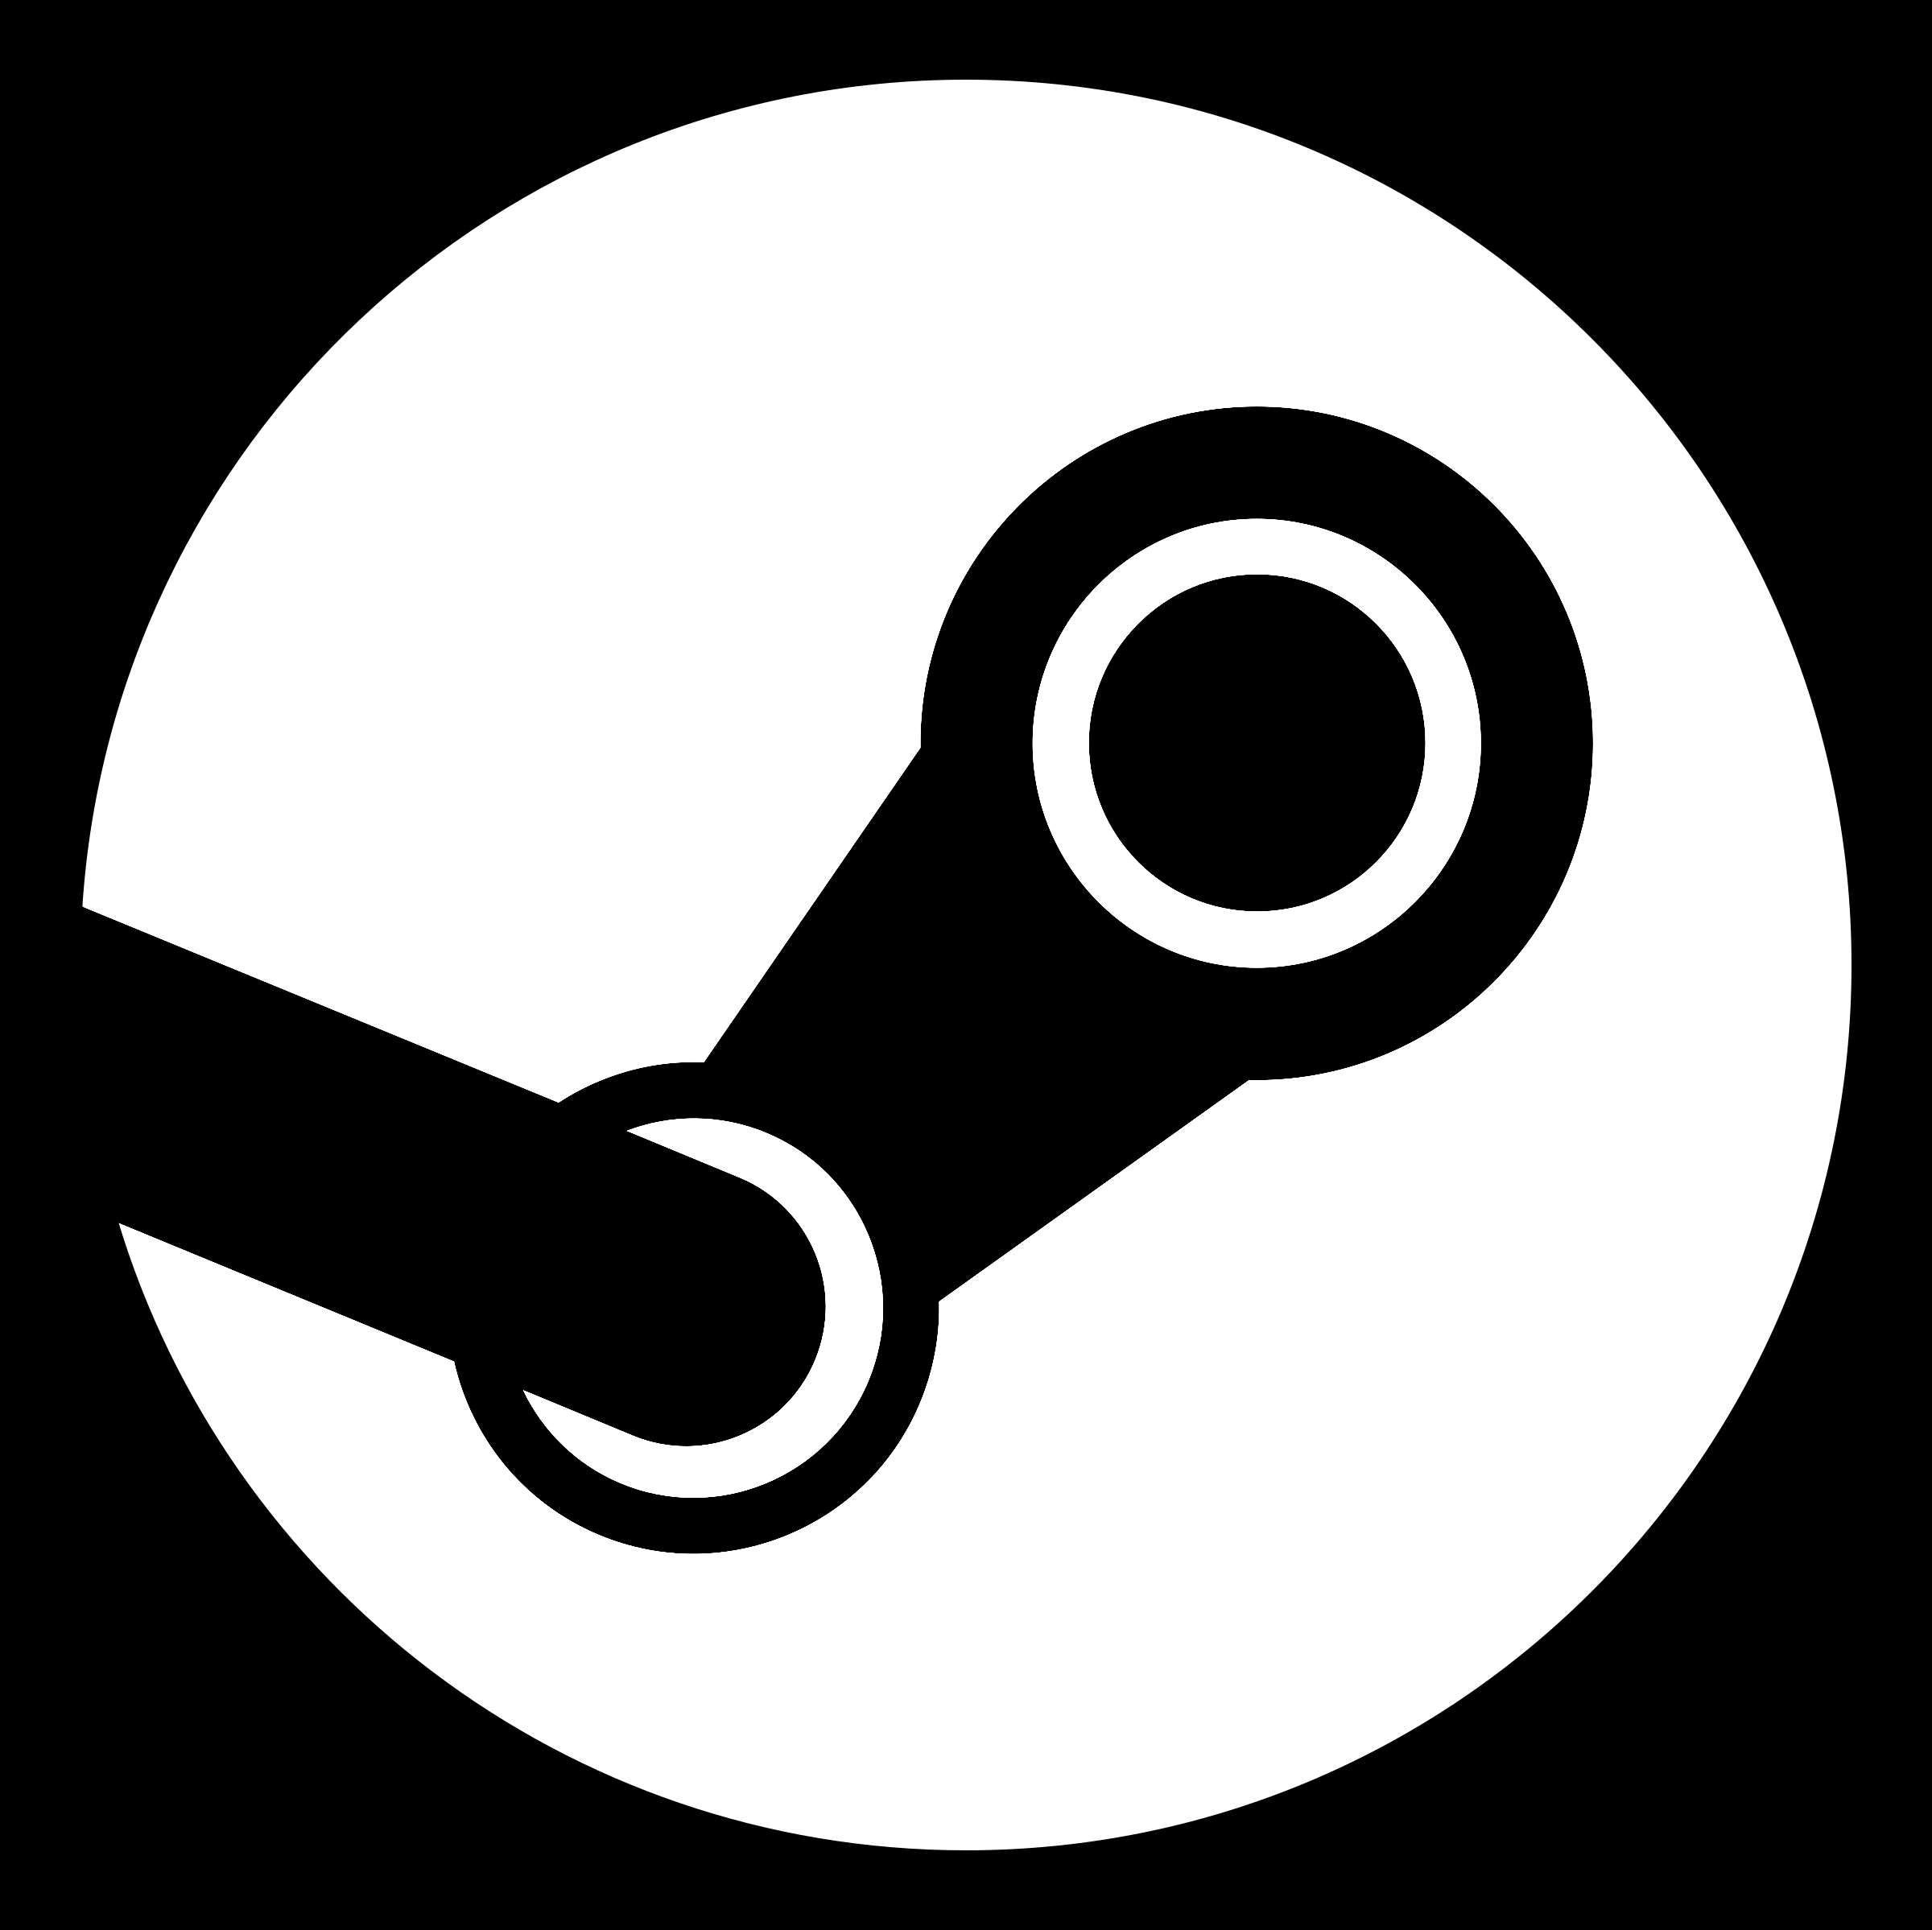 Steam Logo - Steam Logo PNG Transparent & SVG Vector - Freebie Supply